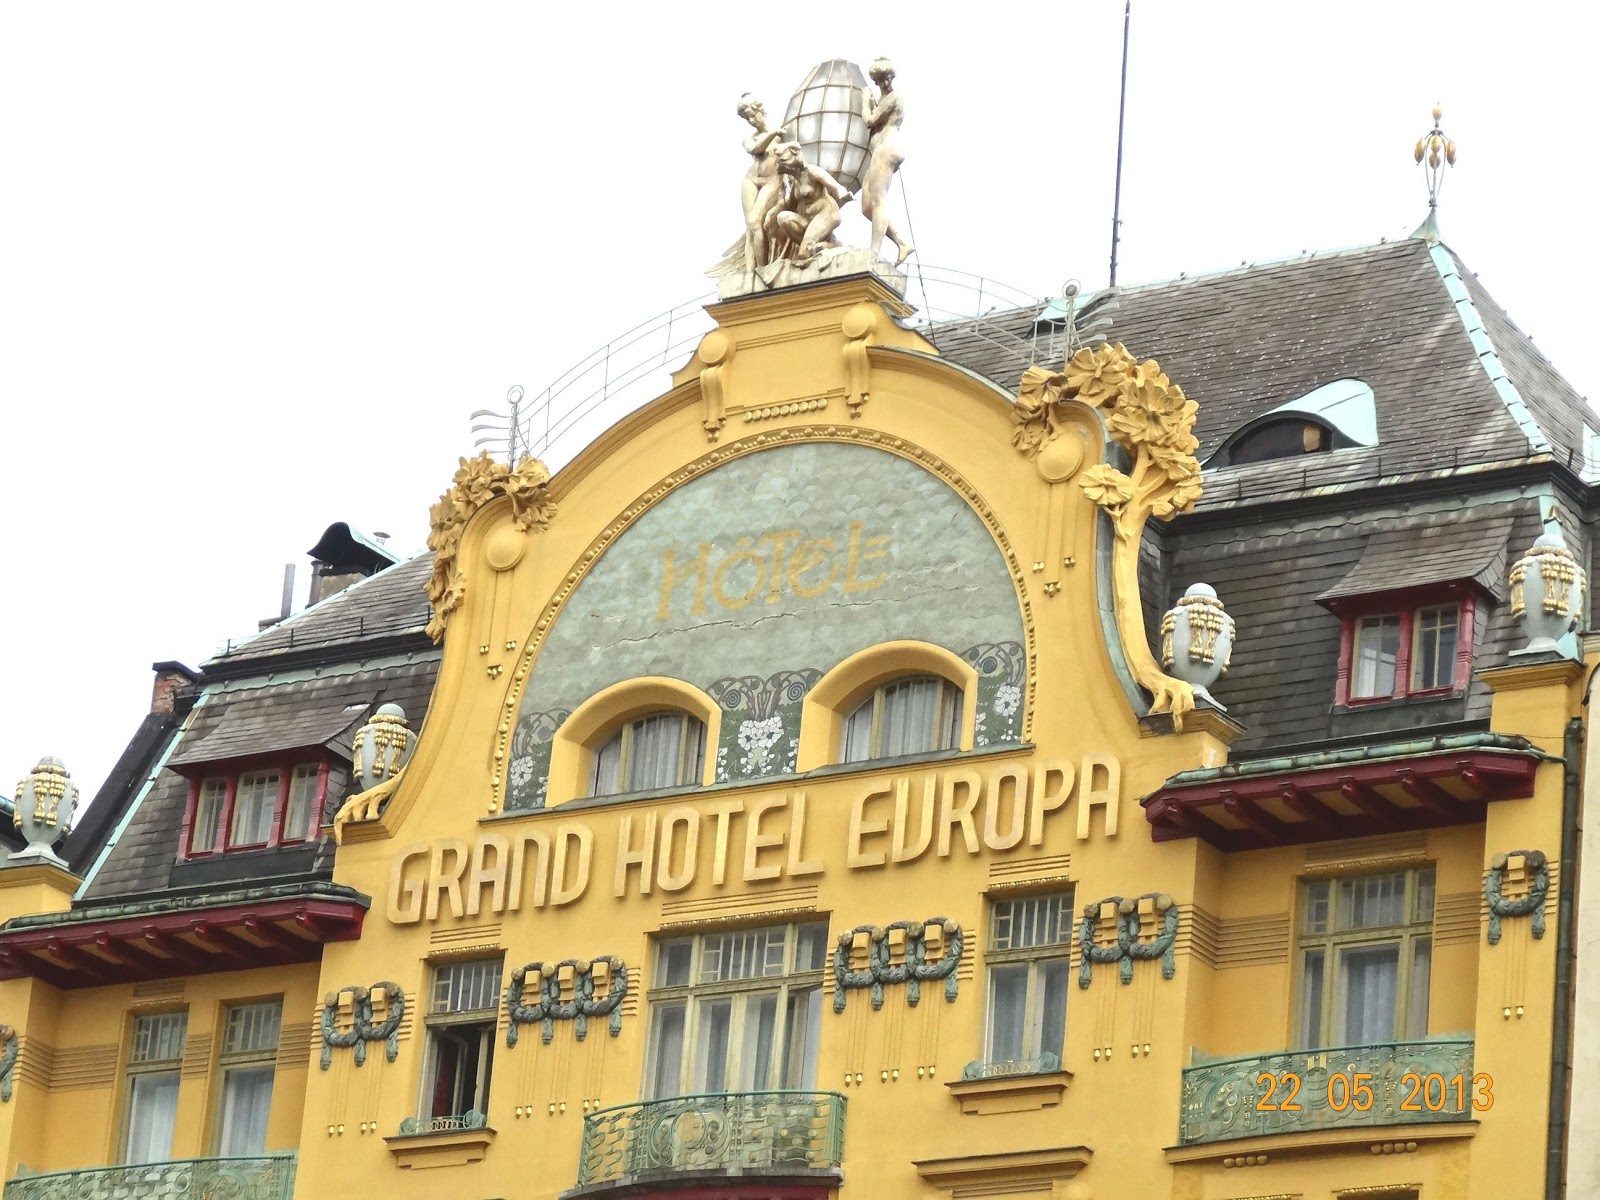 Art Nouveau jewel of Wenceslas Square - Hotel Europe, formerly Grandhotel Sroubek